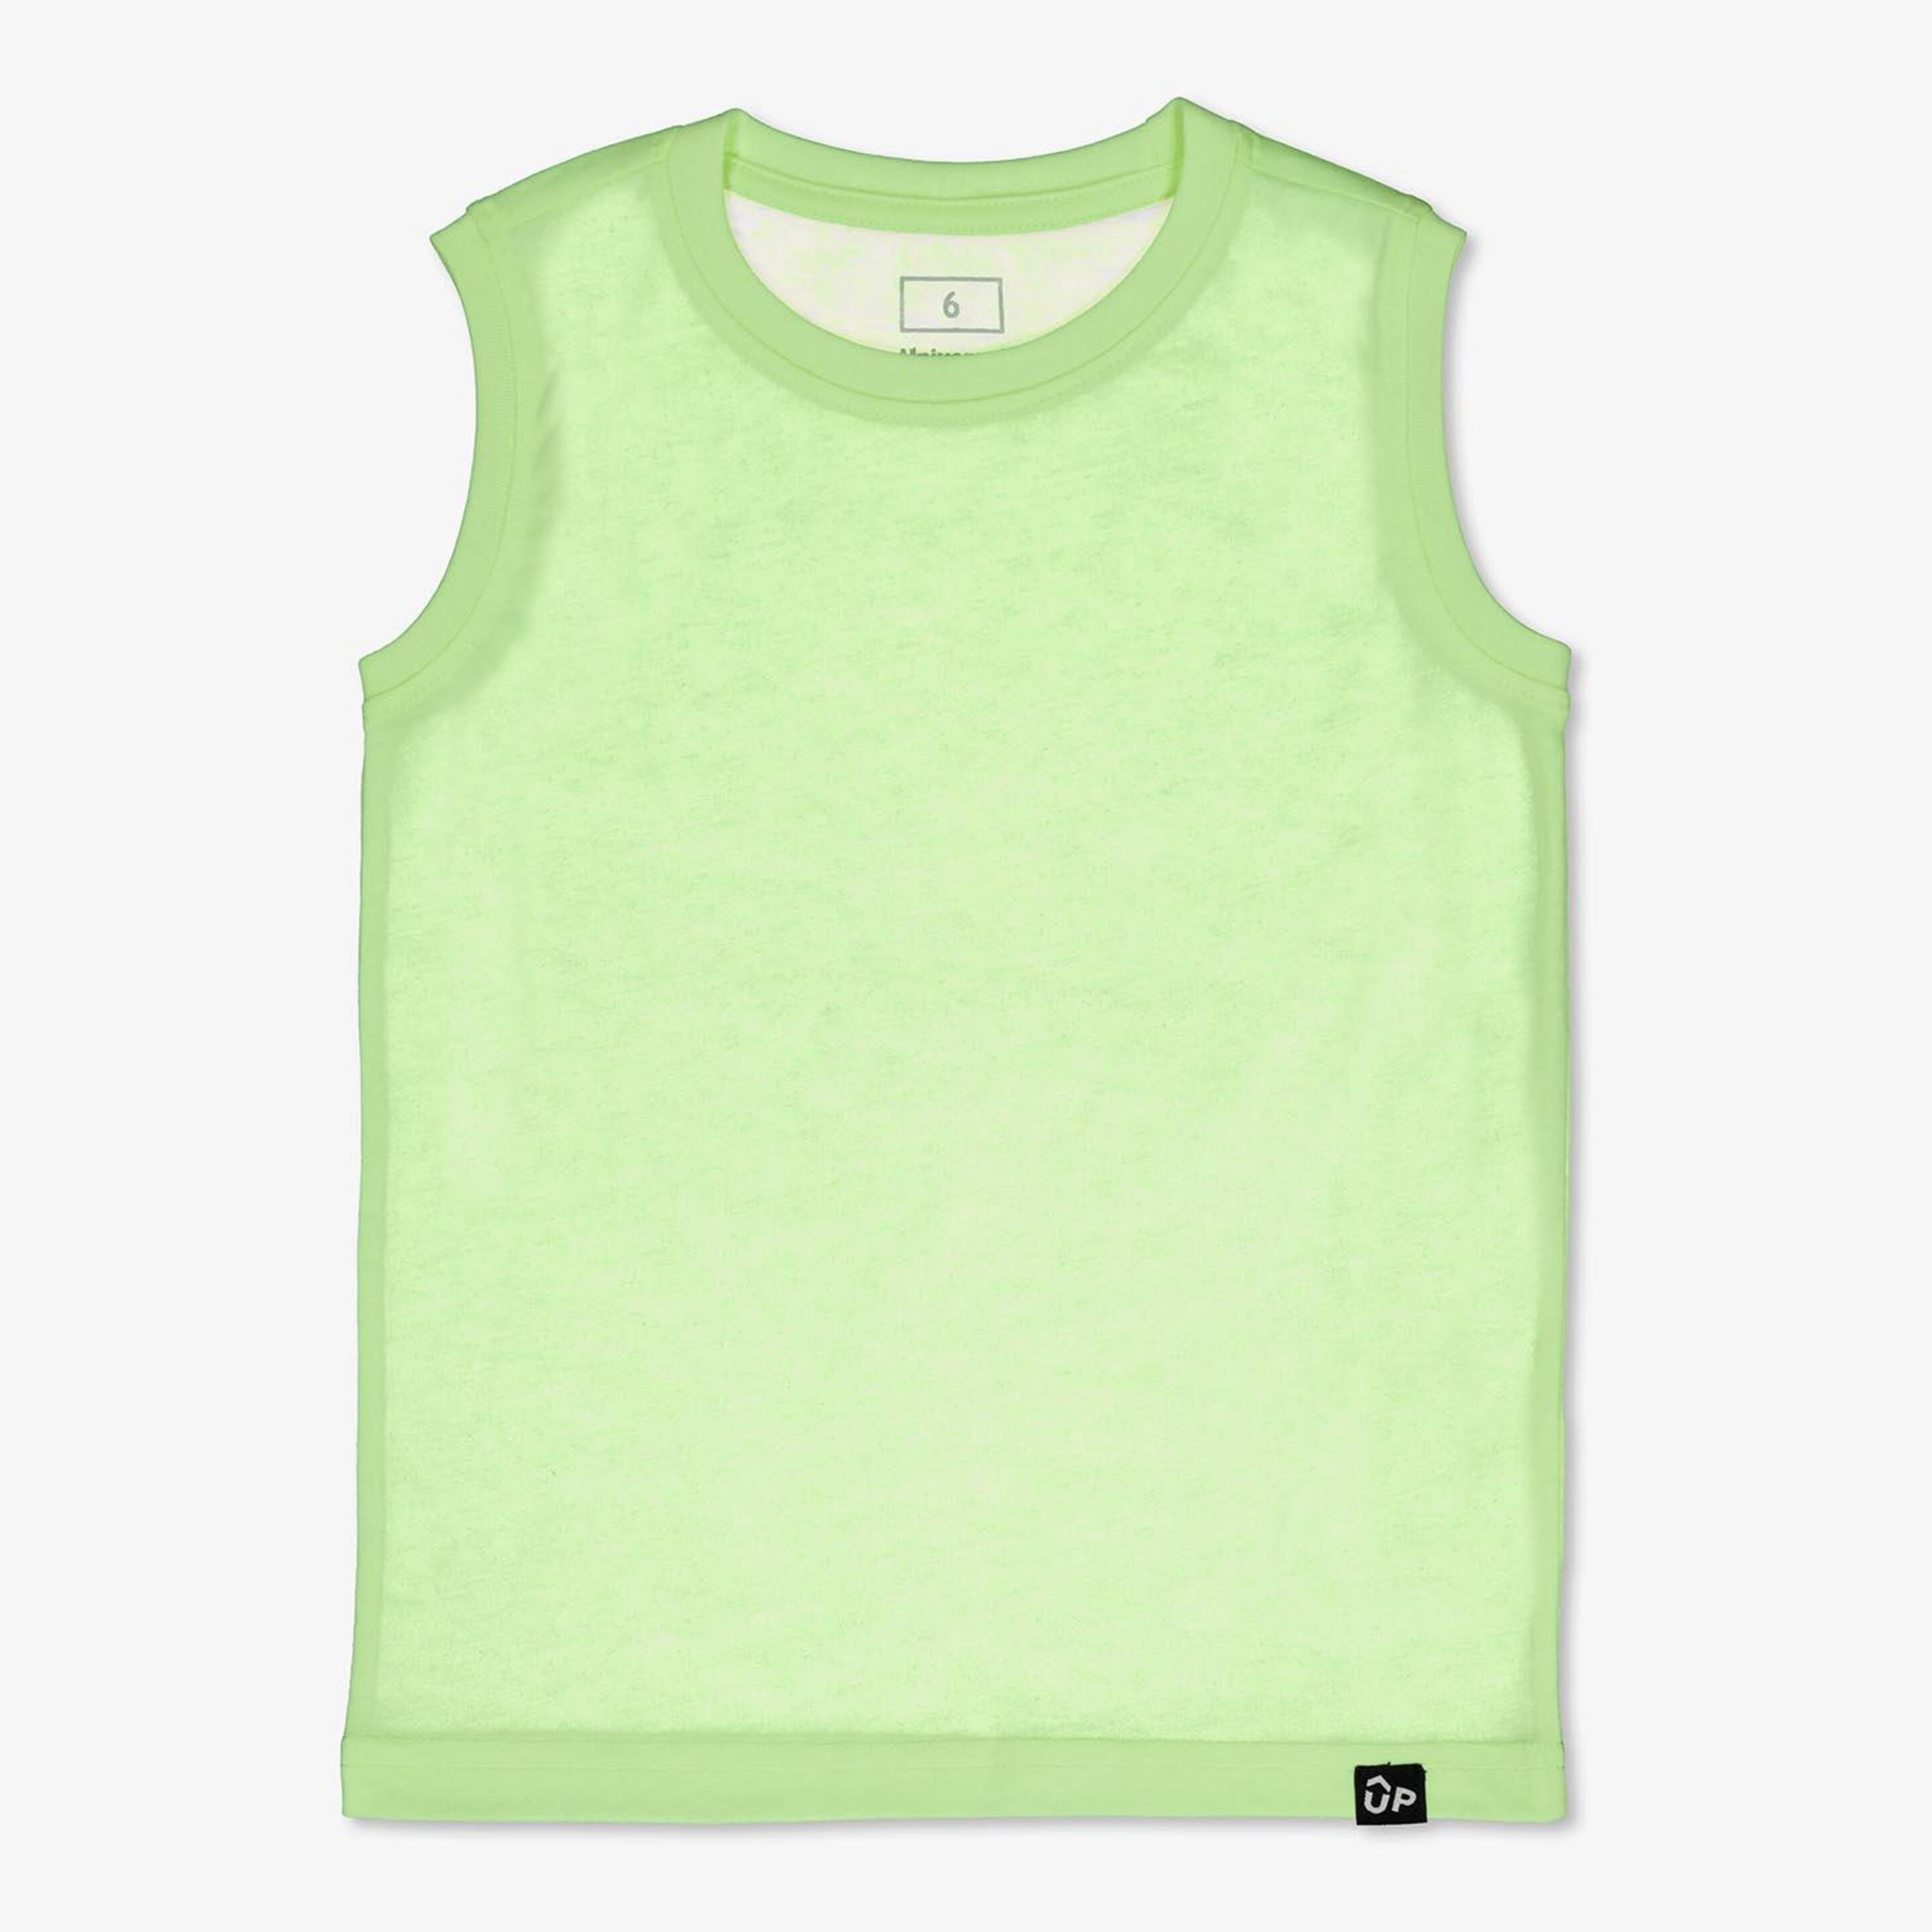 Camiseta Up - verde - Camiseta Tirantes Niño